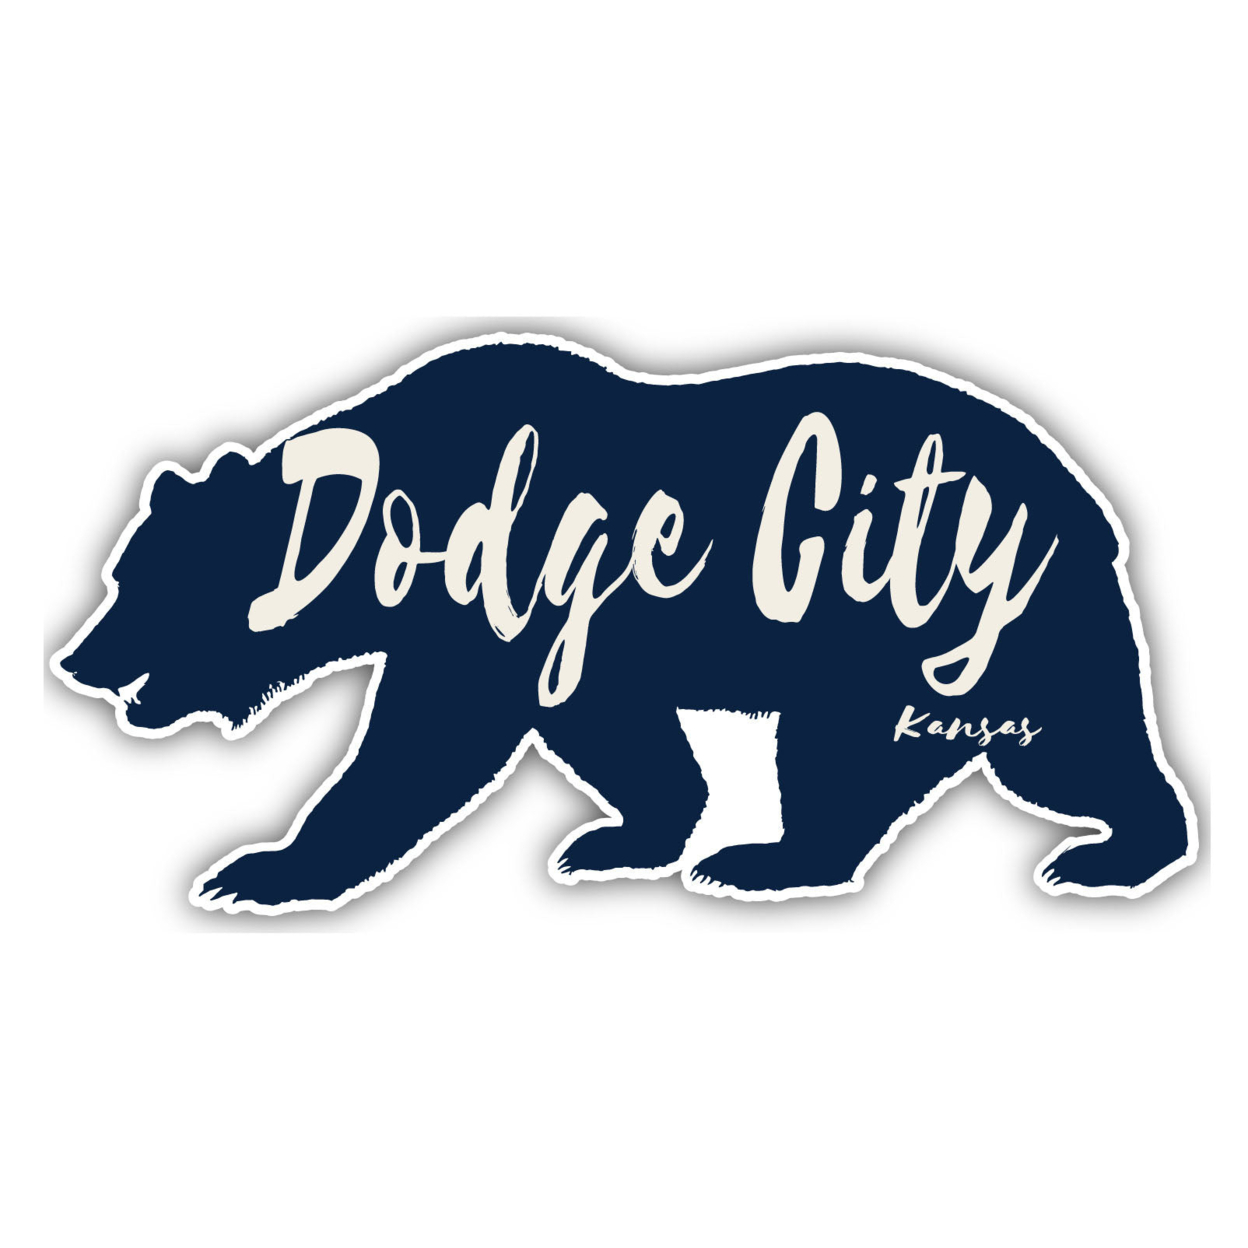 Dodge City Kansas Souvenir Decorative Stickers (Choose Theme And Size) - 4-Pack, 2-Inch, Tent